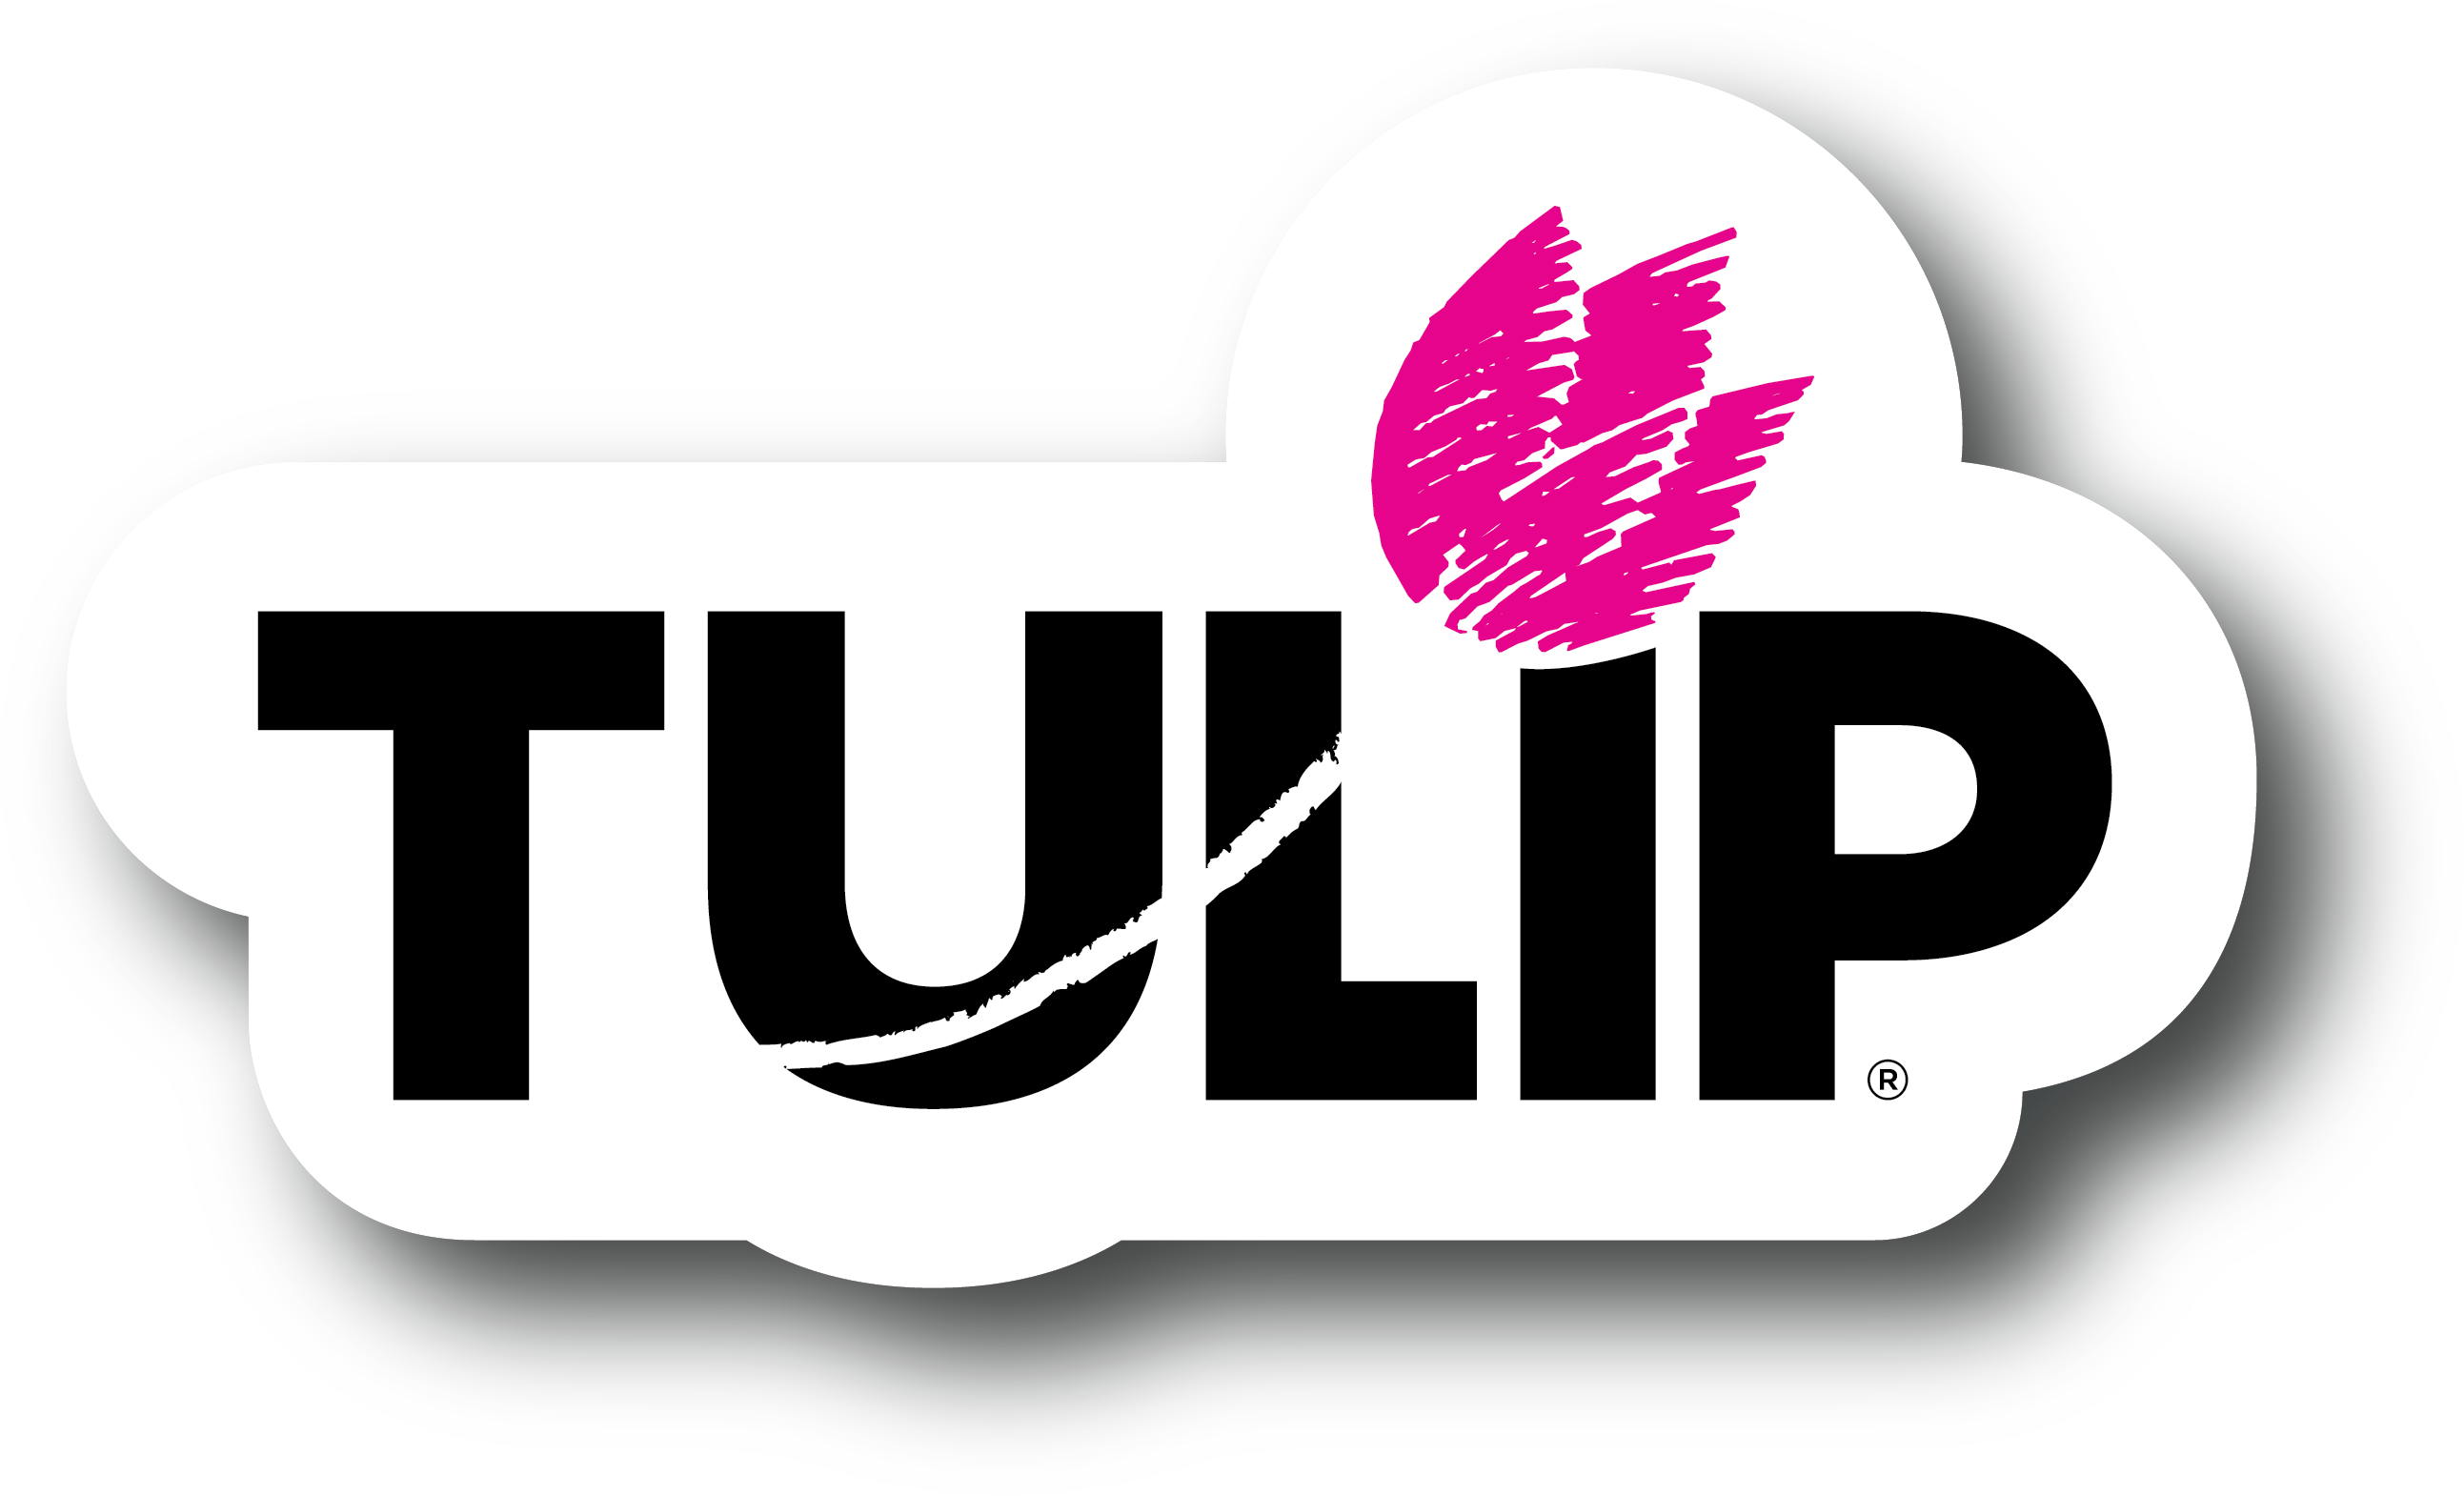 Tulip One-Step Psychedelic Tie-Dye Kit